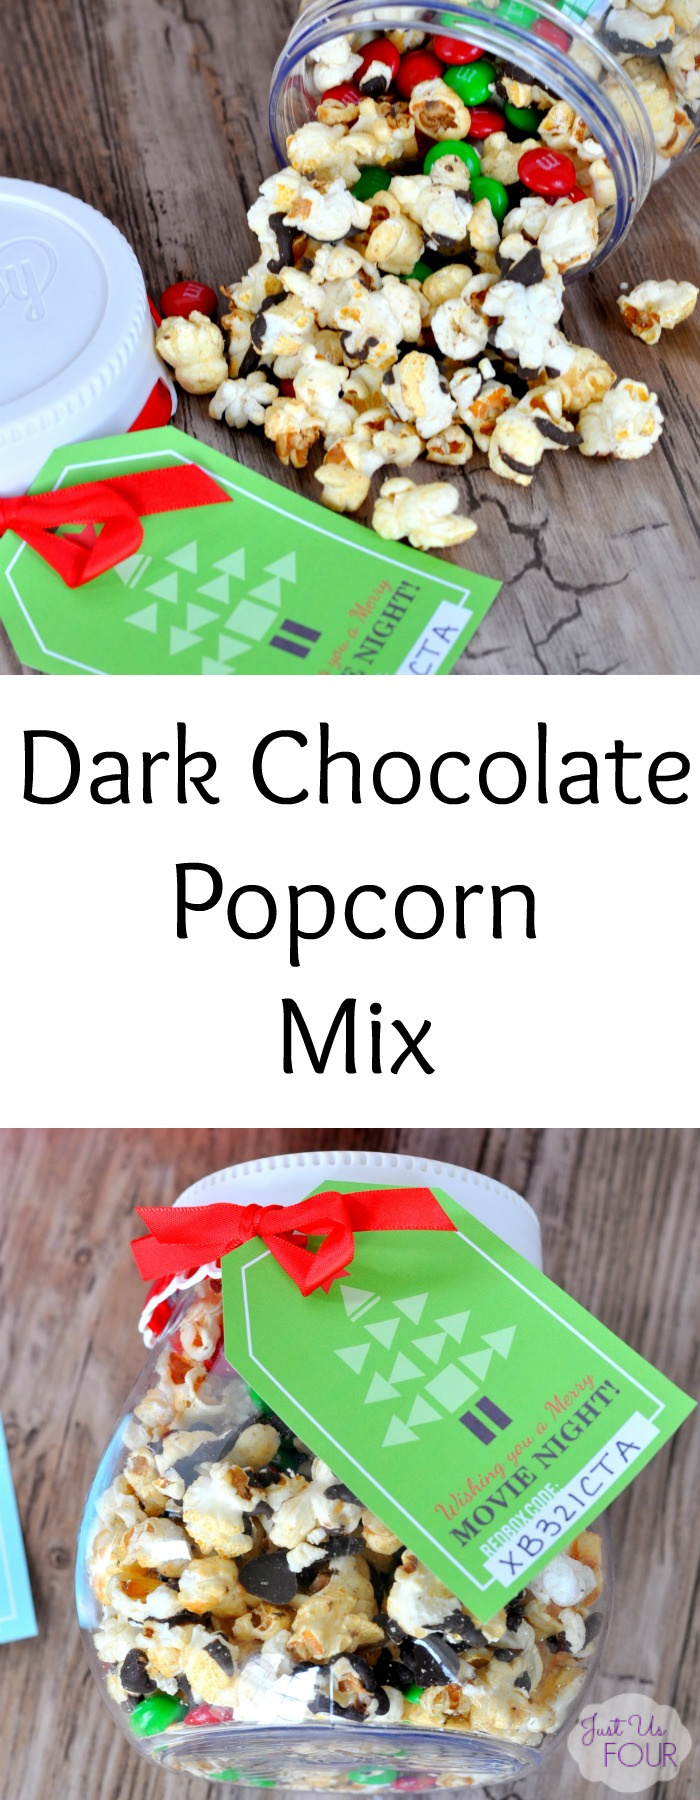 Movie Gift Basket with Dark Chocolate Popcorn Mix